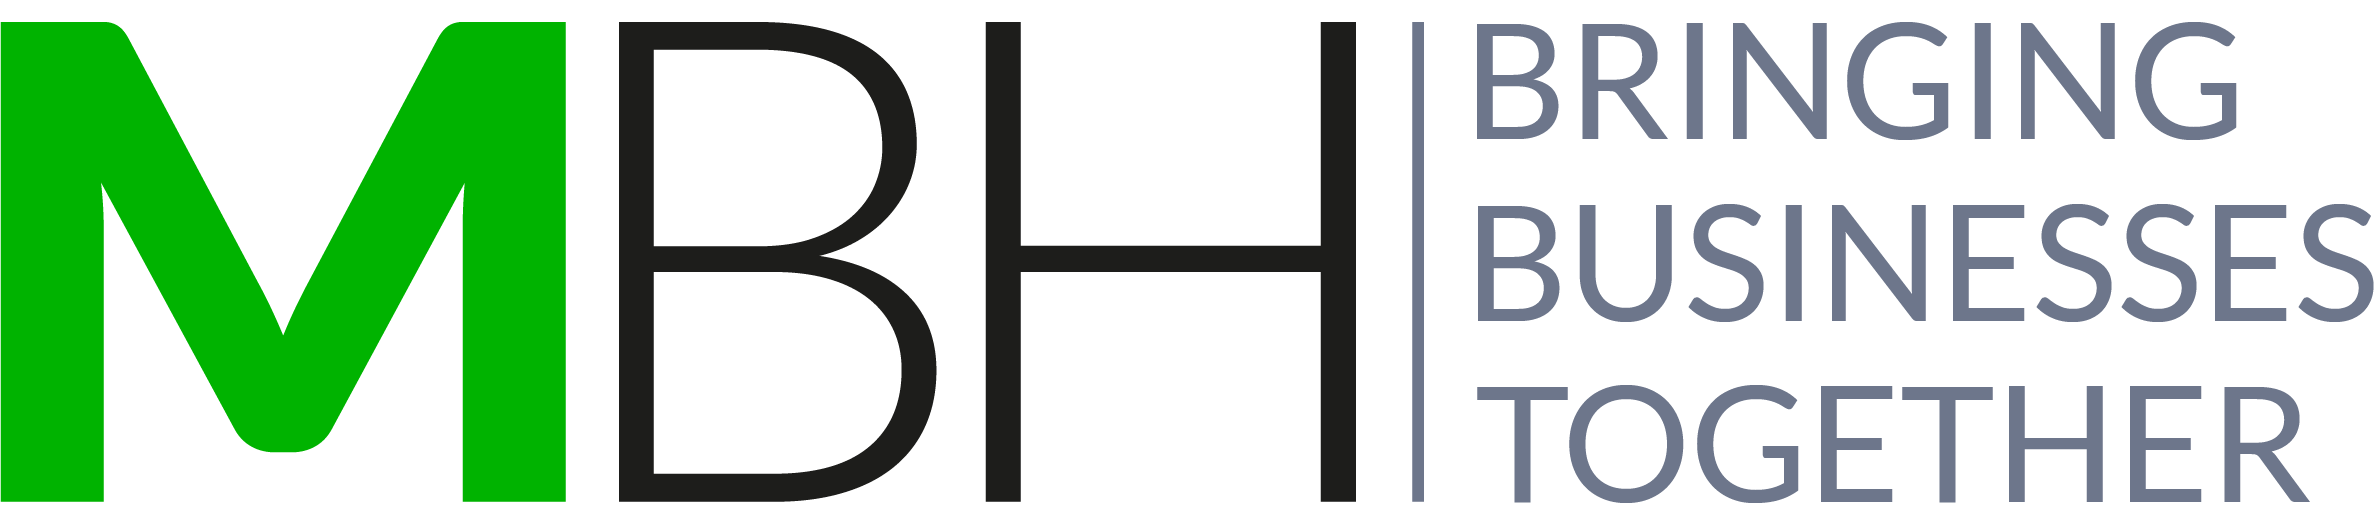 MBH: Manchester's B2B Business Hub Logo